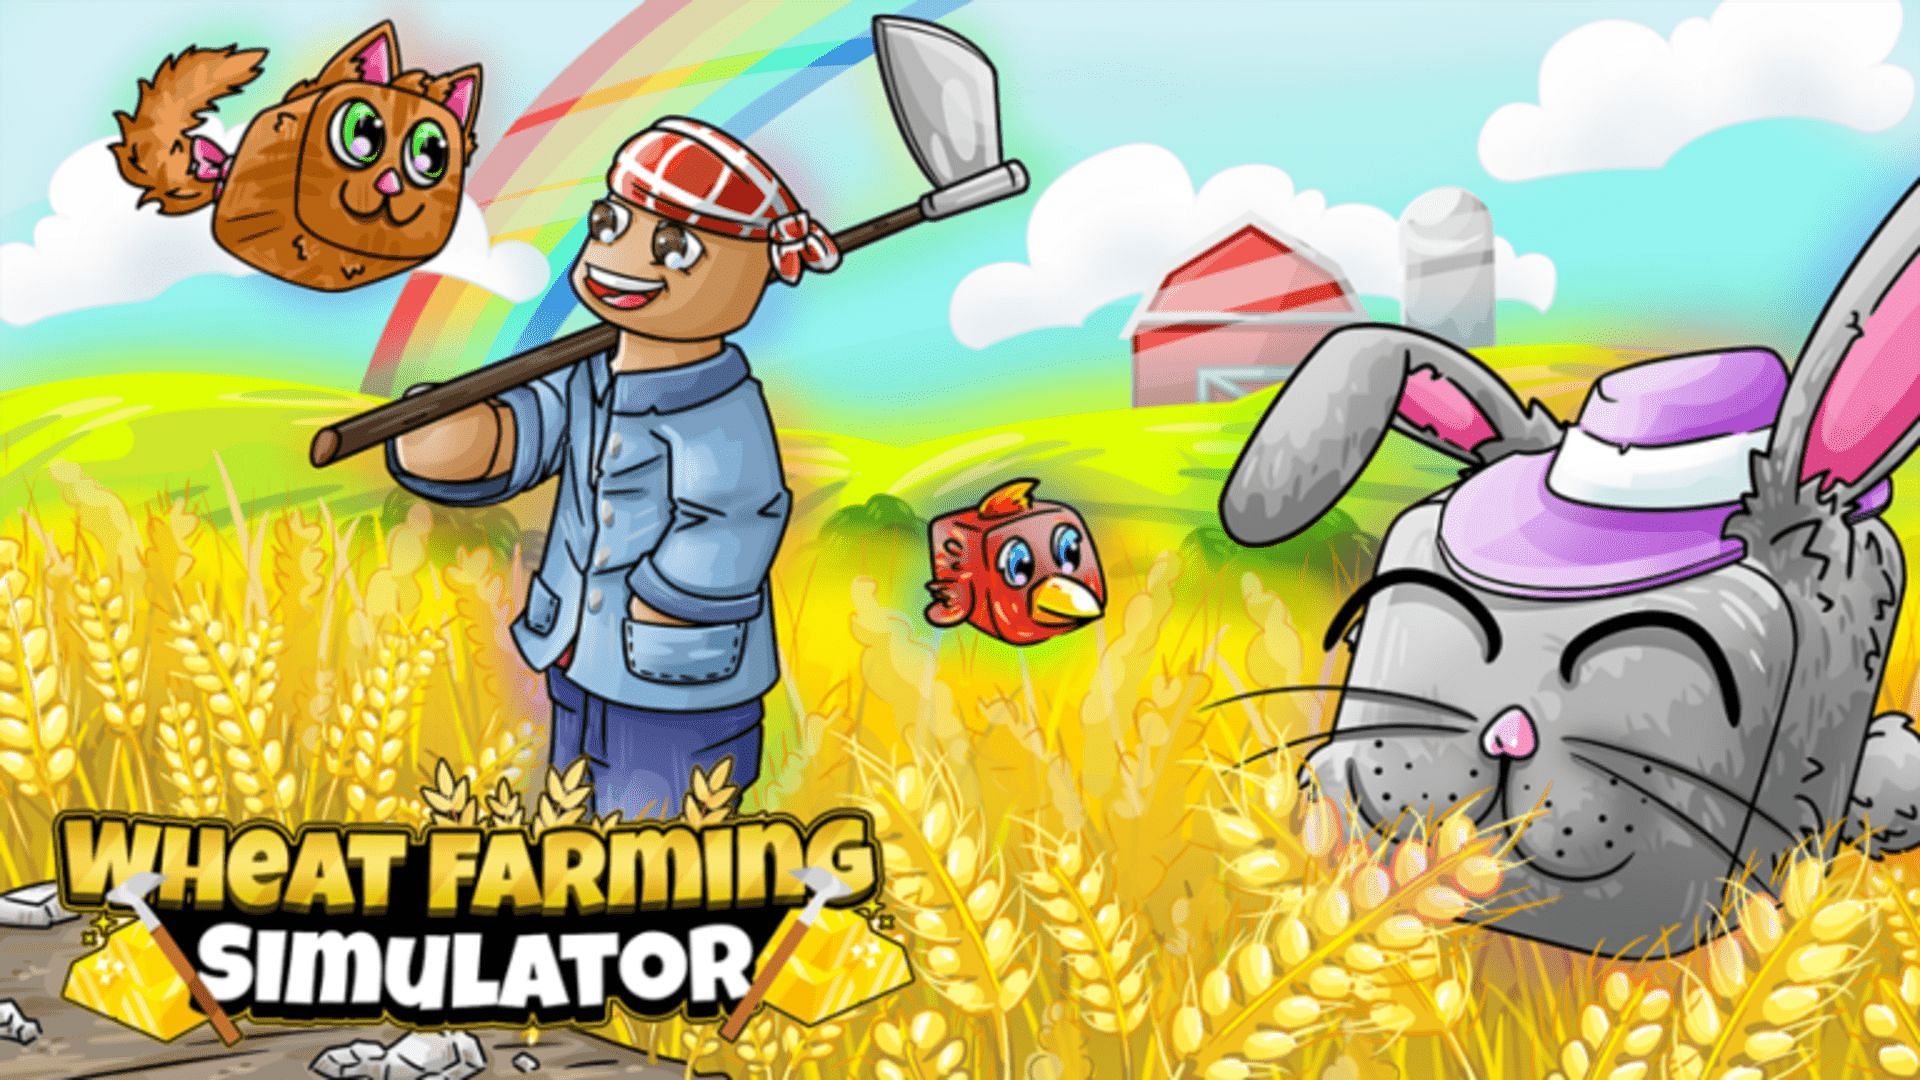 Wheat Farming Simulator codes